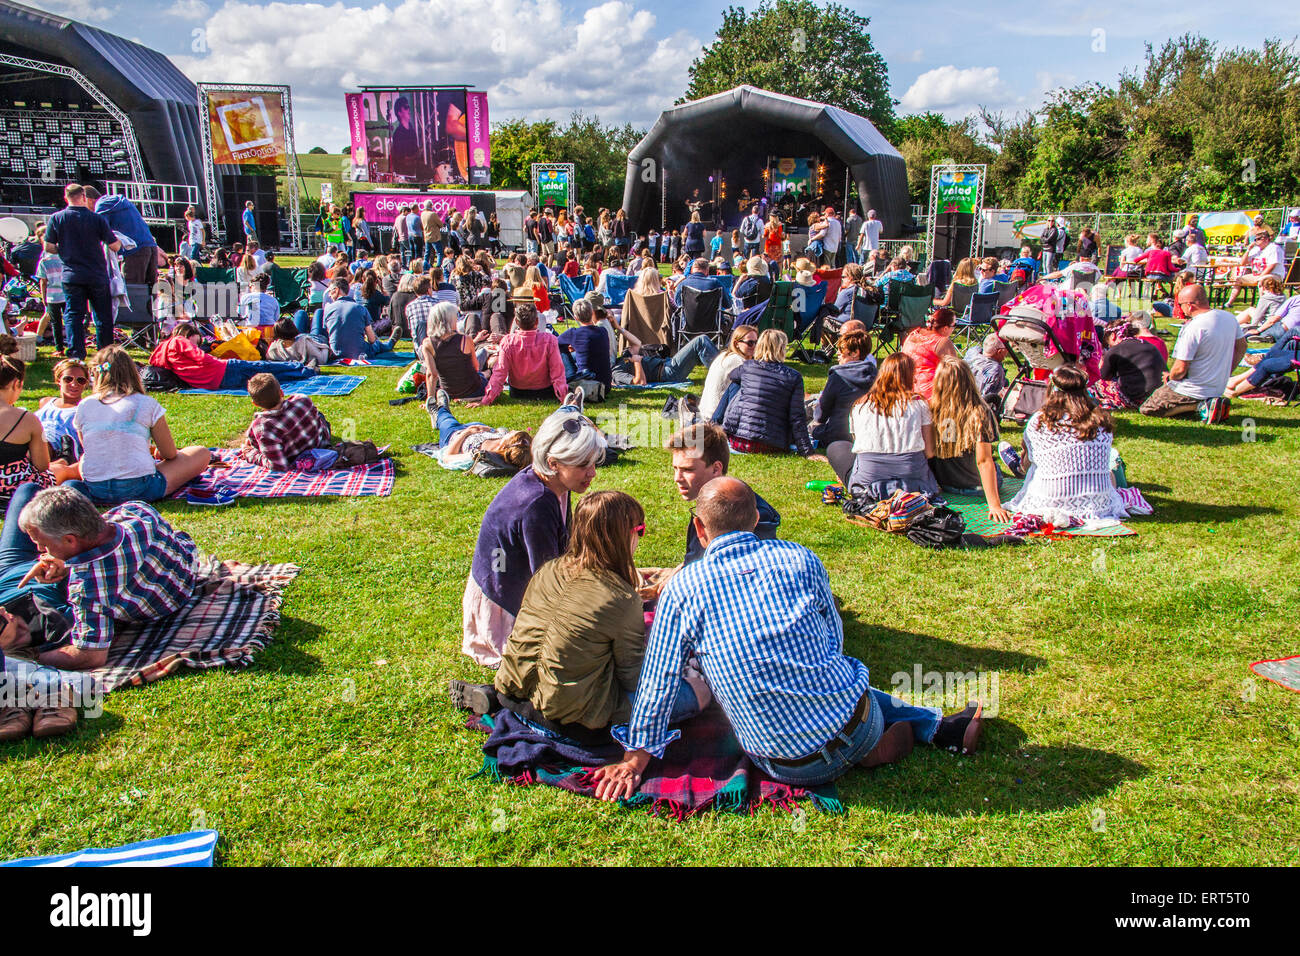 Festival de musique 2015 Alresford, New Alresford, Hampshire, Angleterre, Royaume-Uni. Banque D'Images